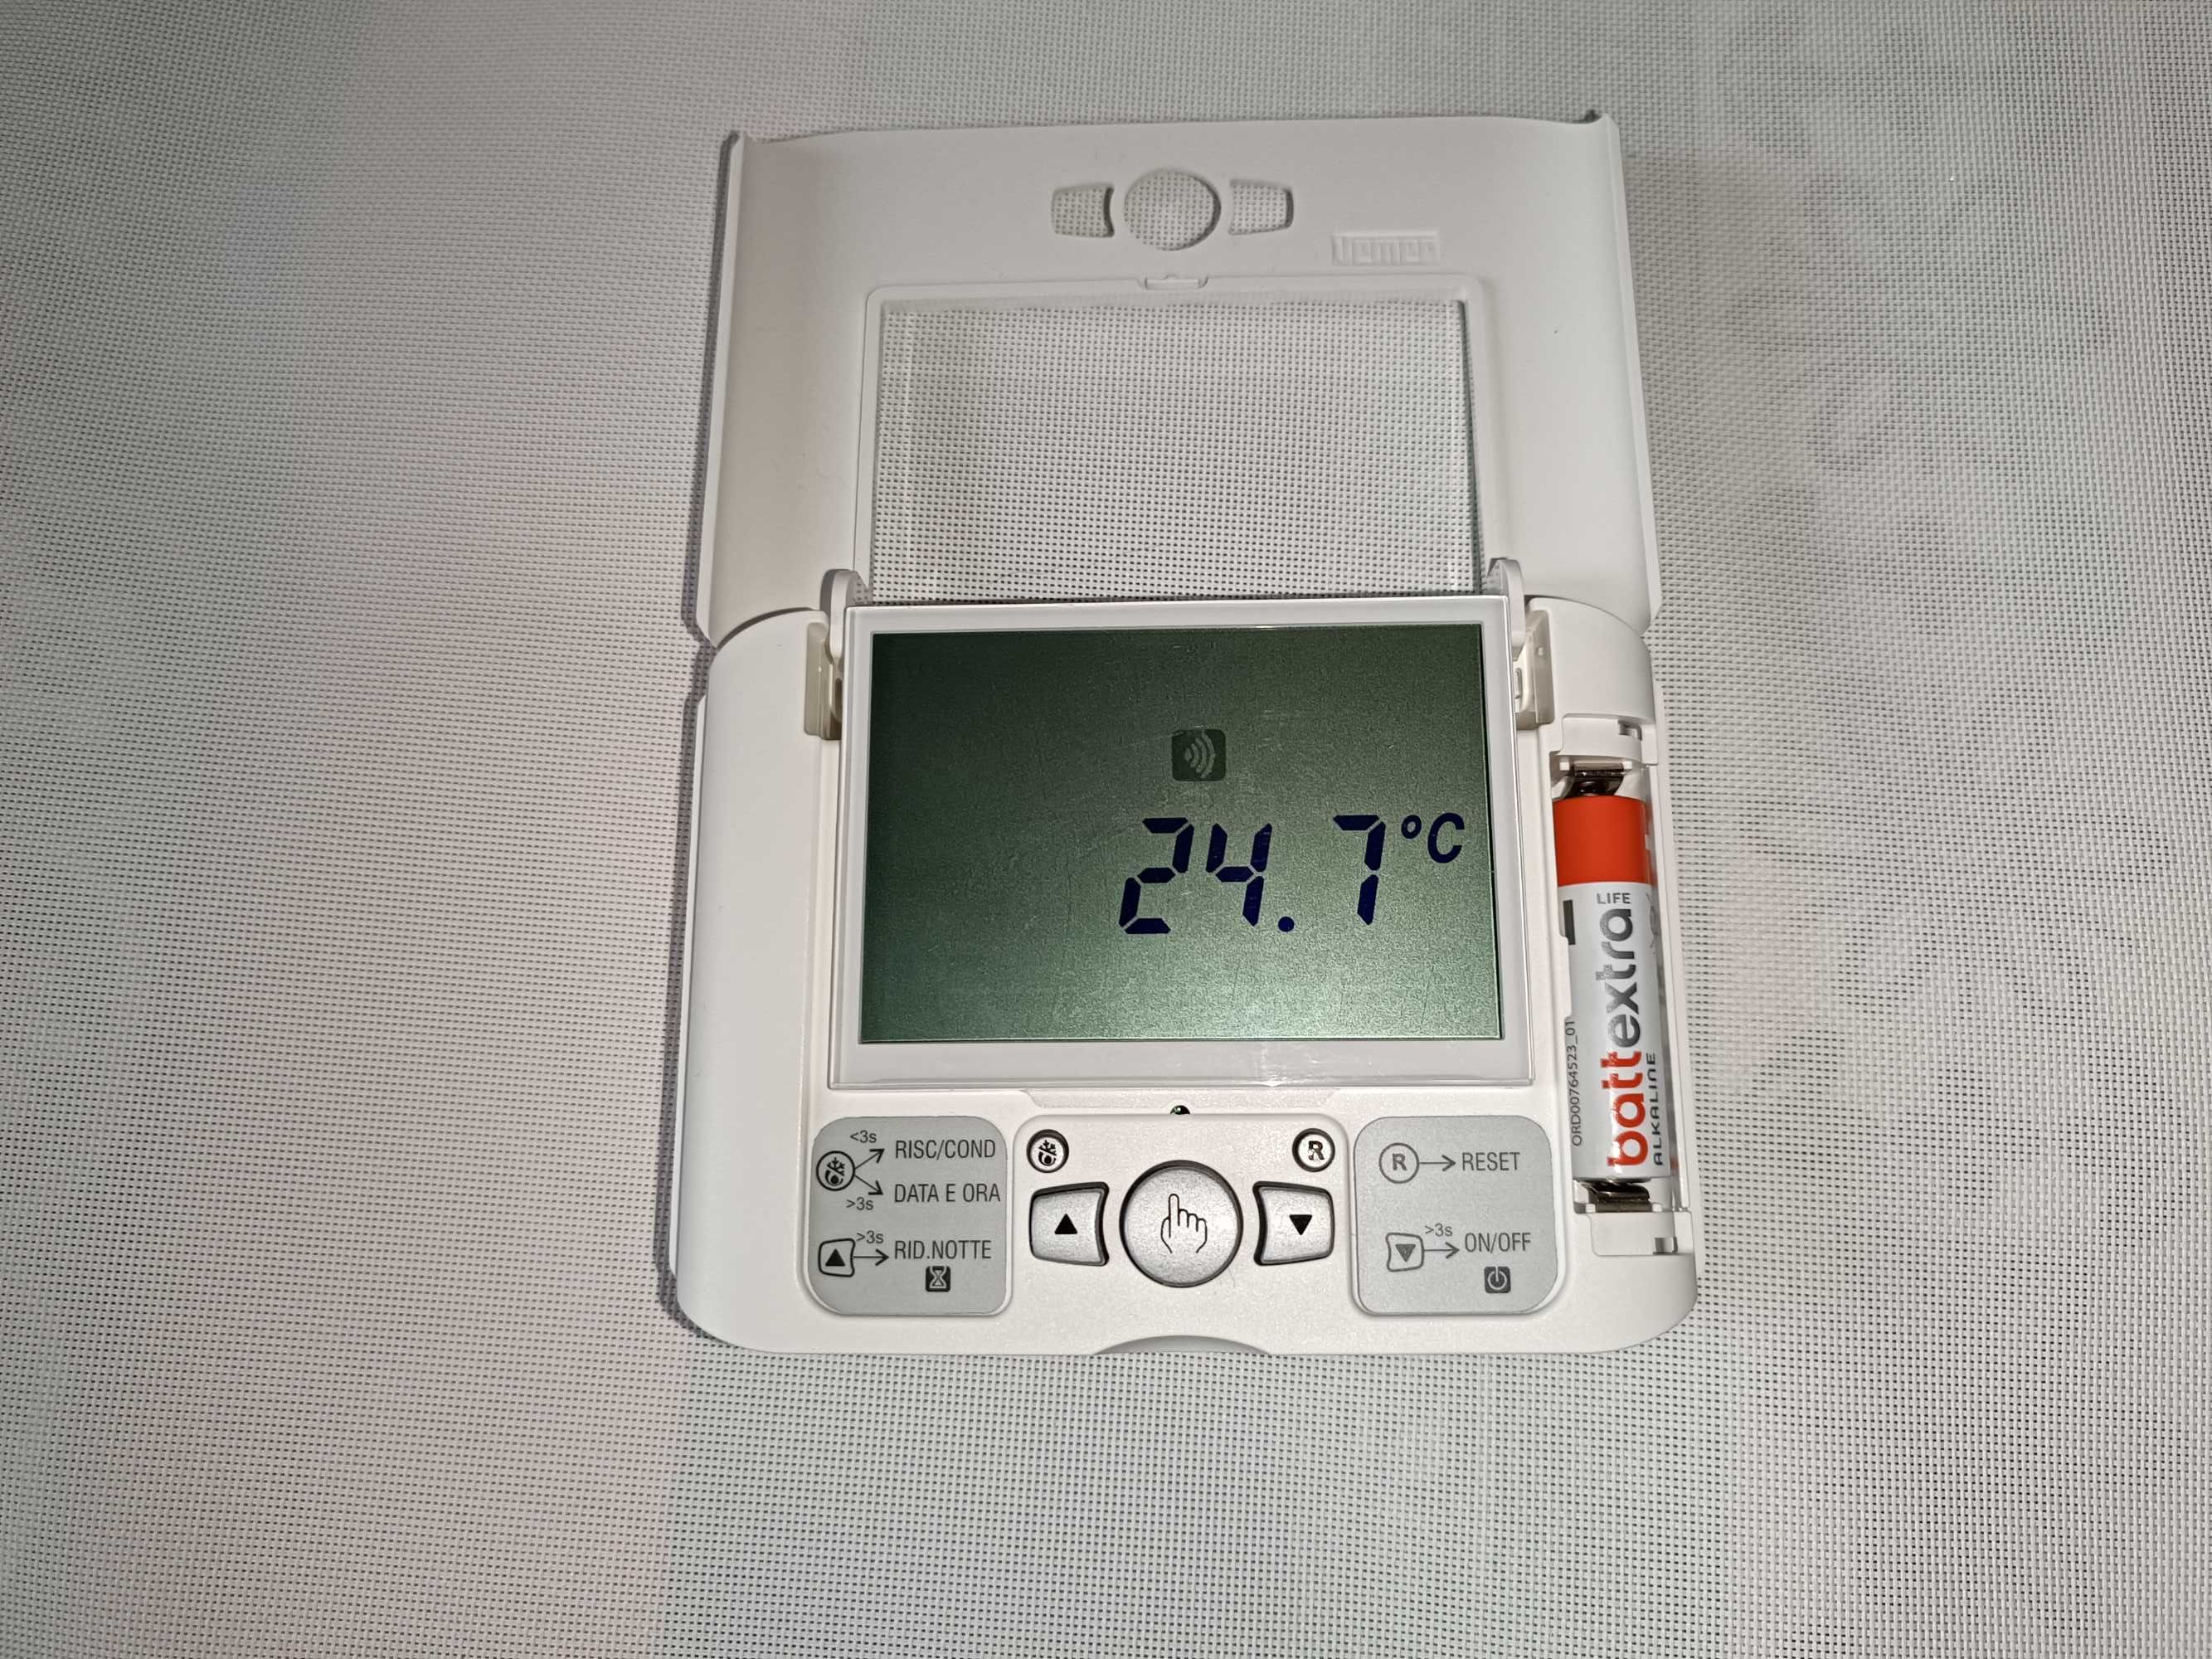 Cyfrowy termostat ścienny VEMER Thermo VE715900 GSM na kartę SIM